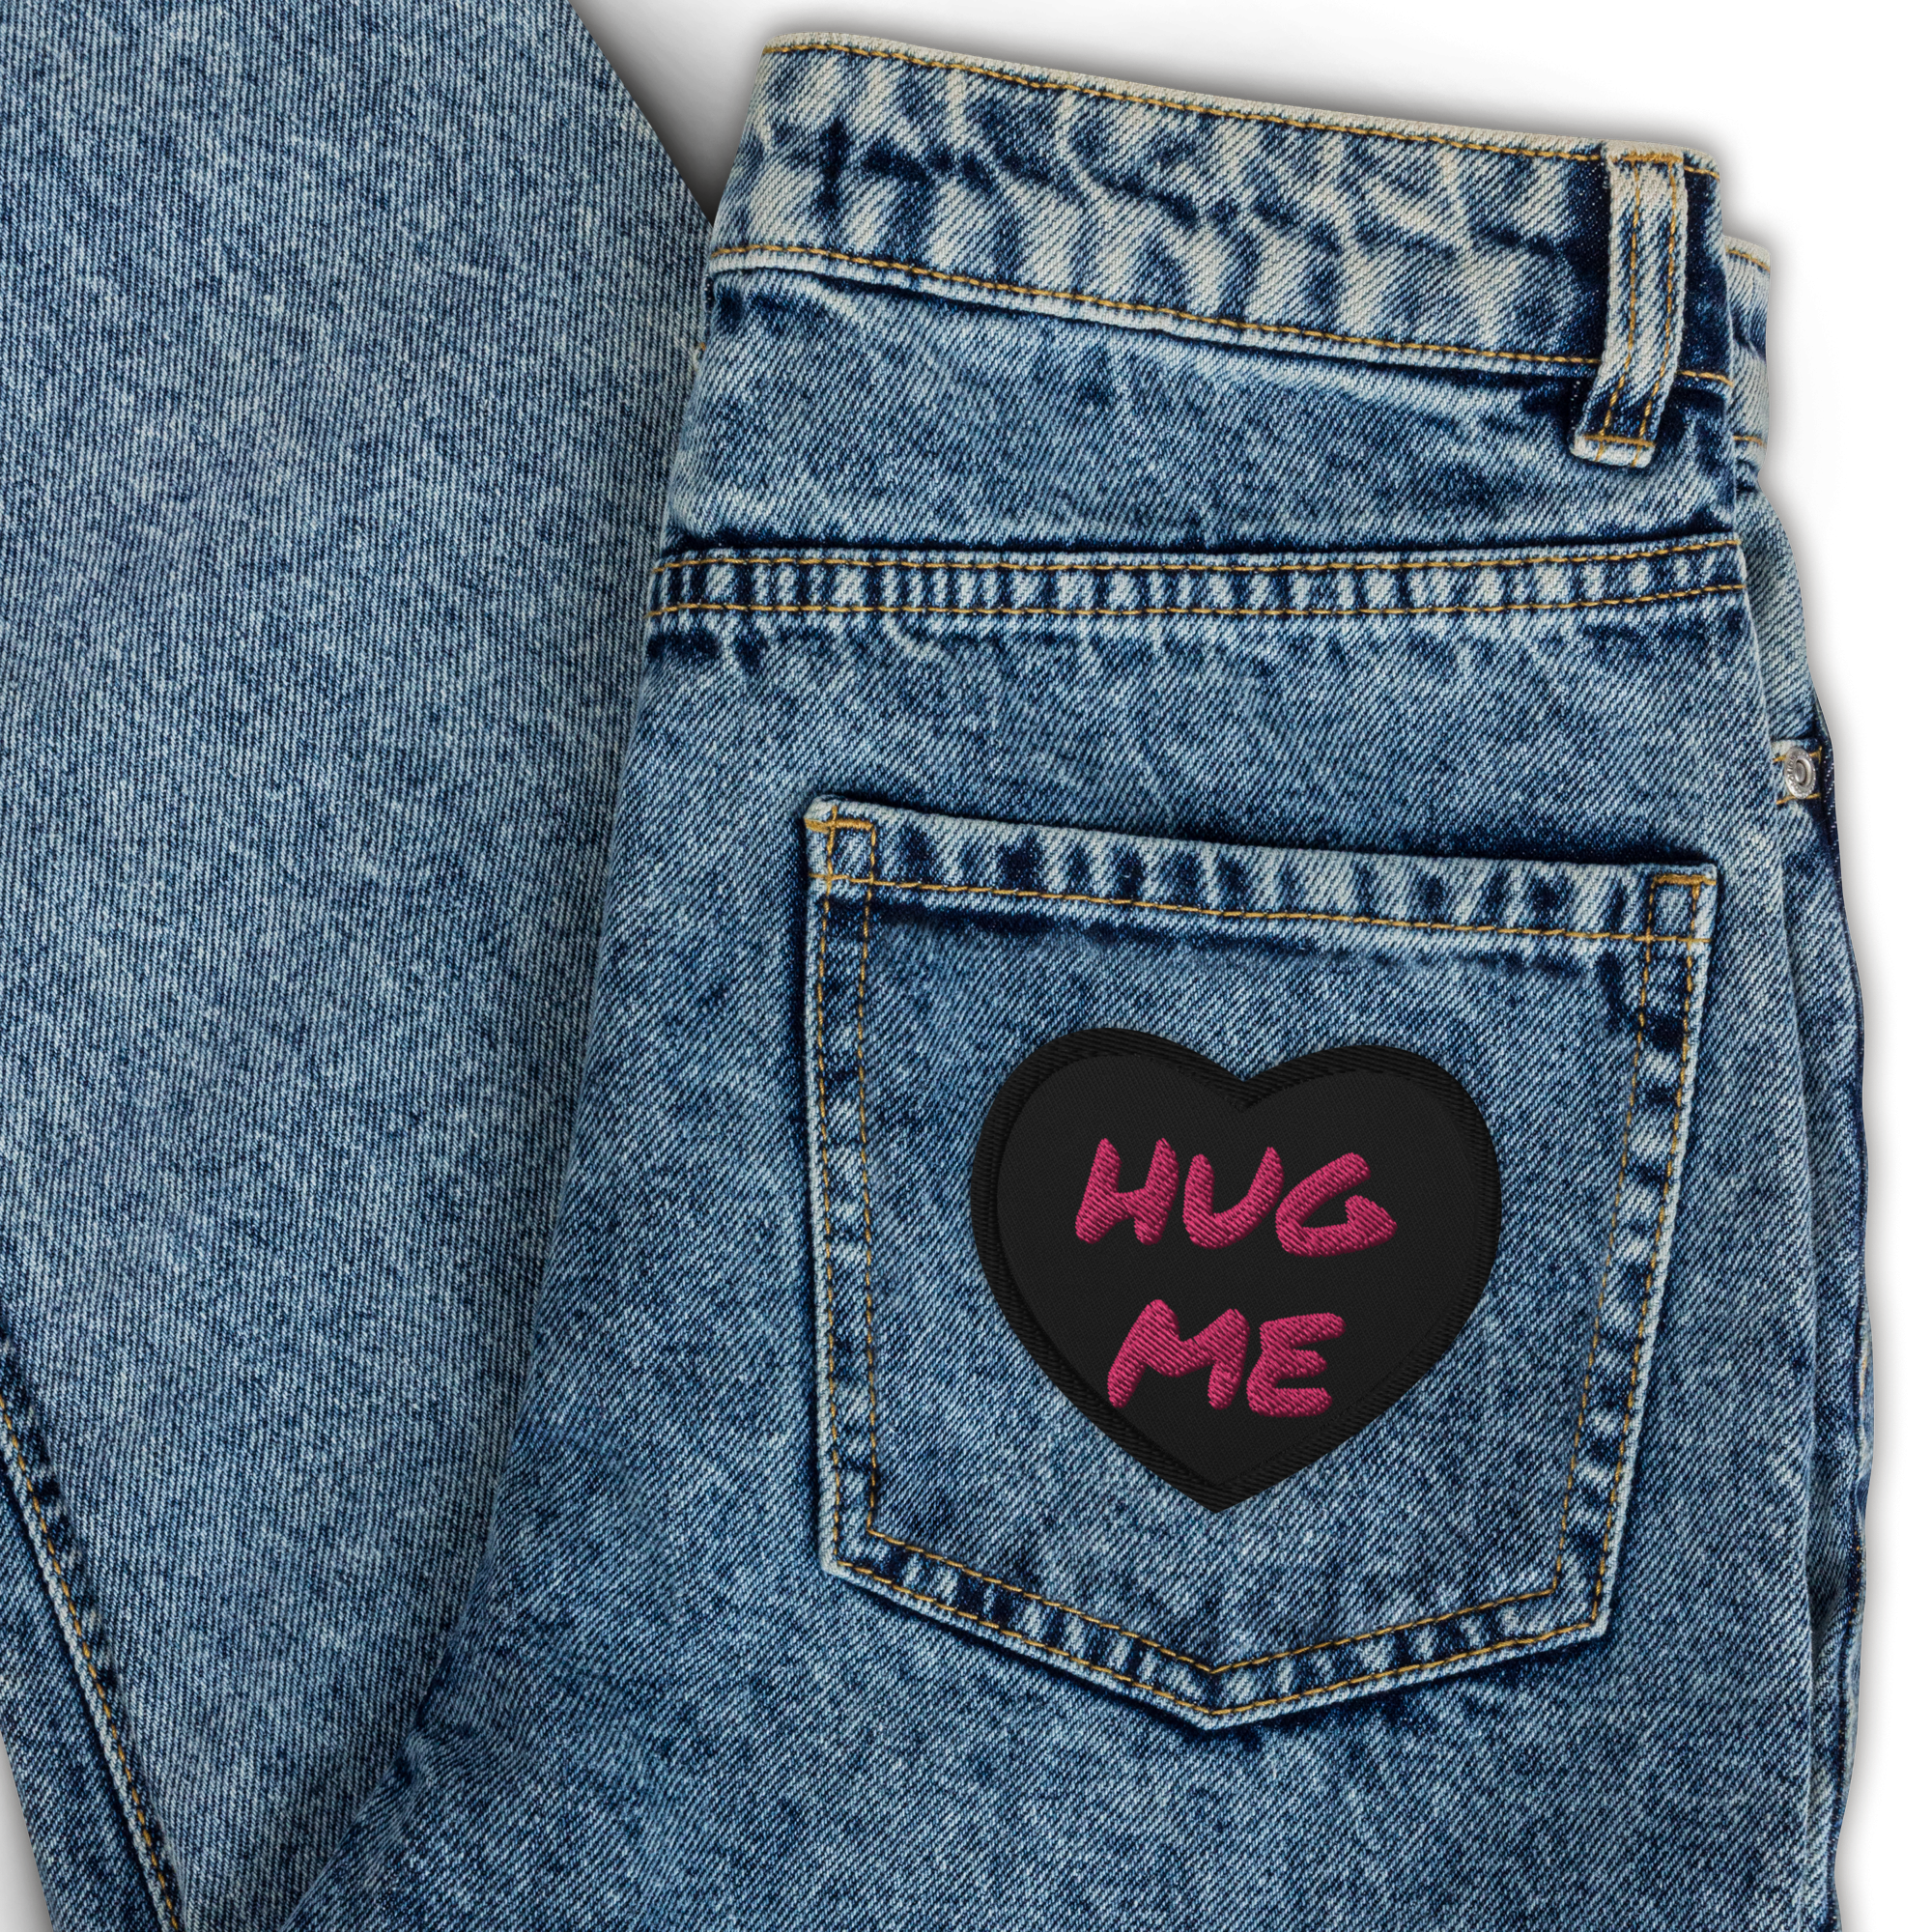 HUG ME Patch